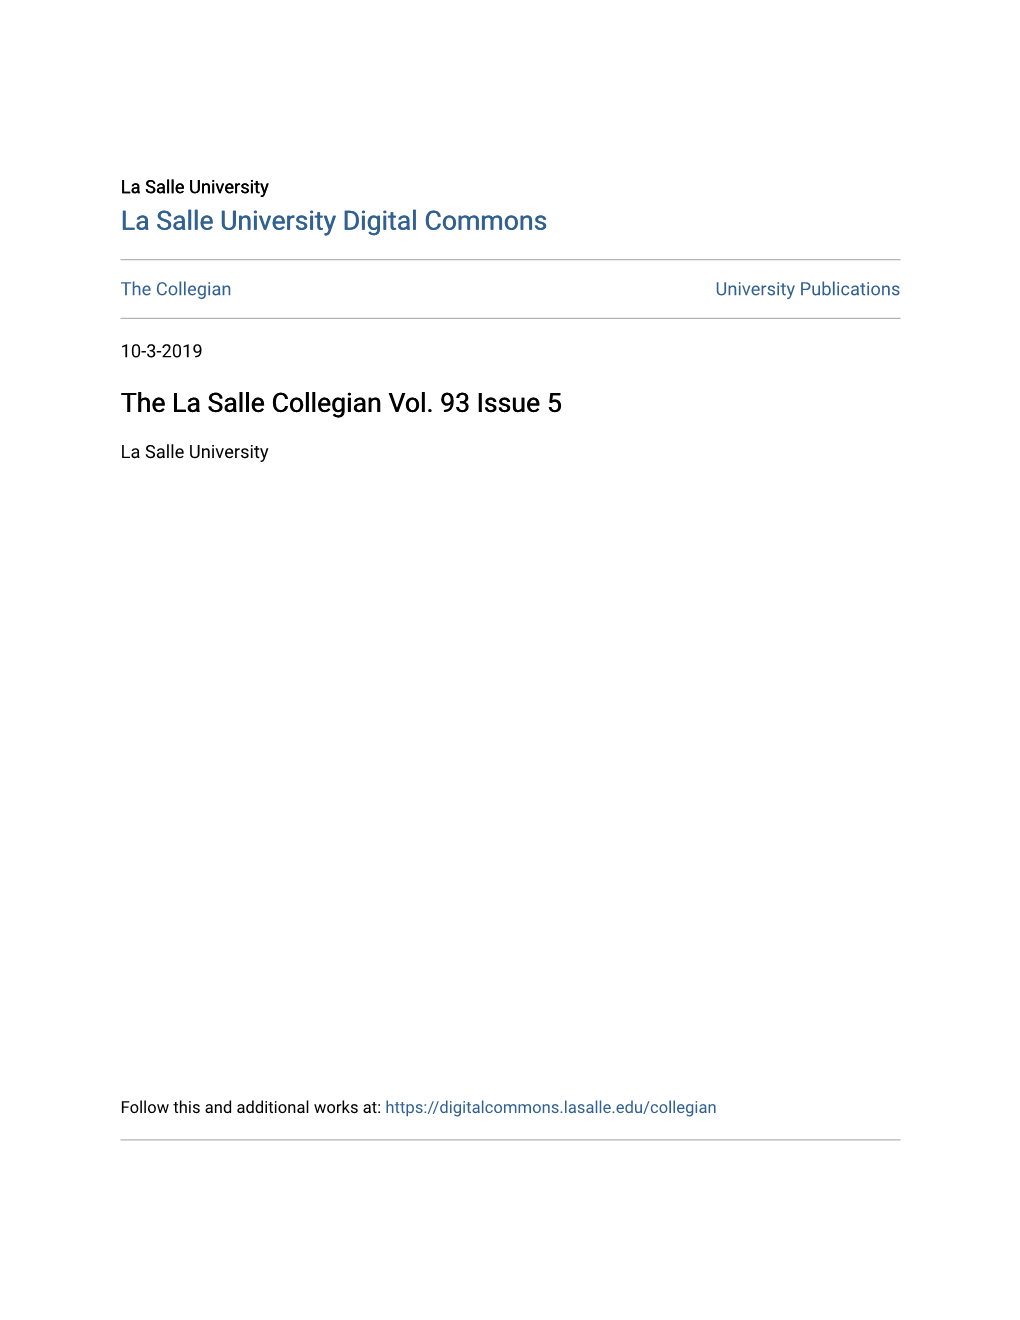 The La Salle Collegian Vol. 93 Issue 5